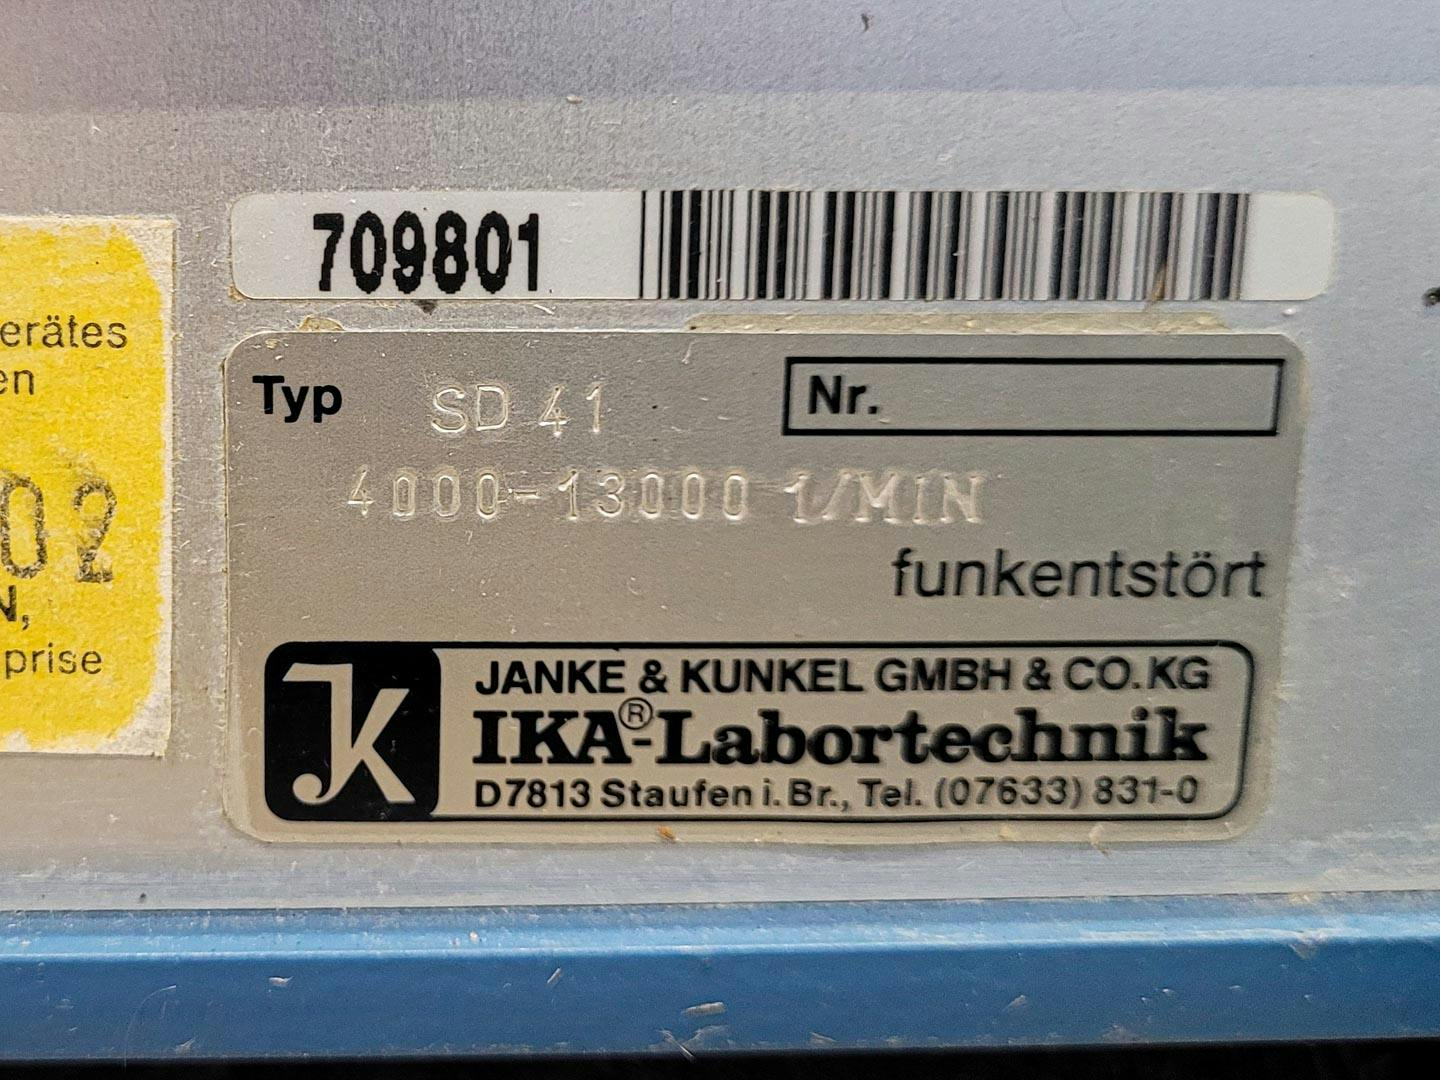 IKA Werke Super Dispax SD-41 - Inline mixer - image 9